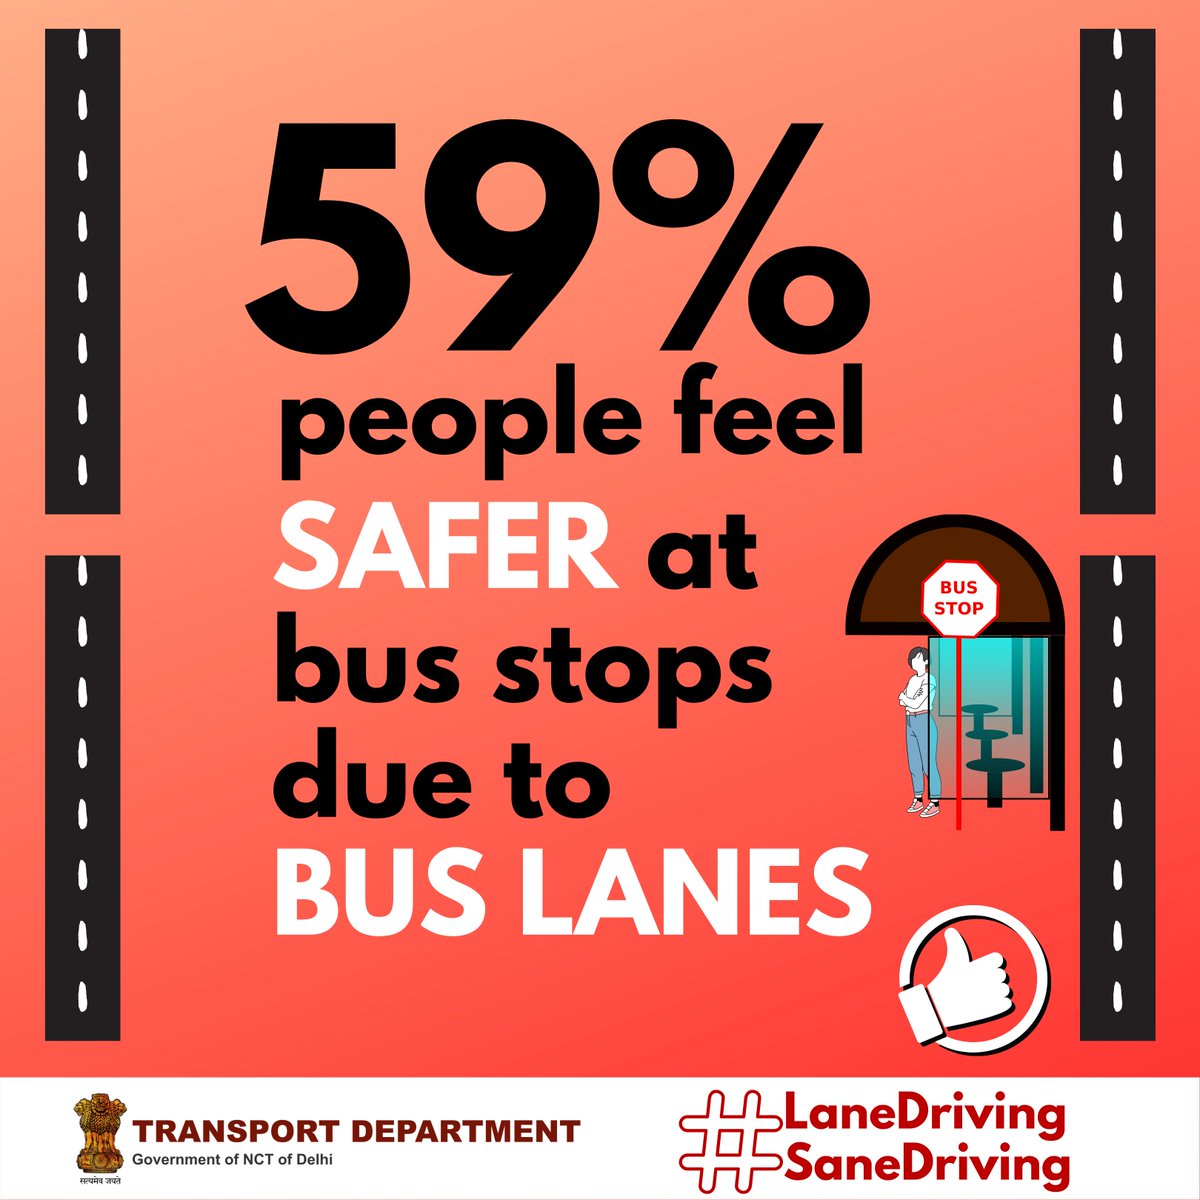 As per our latest survey, 59% people feel safer at bus stops after bus lane enforcement started in Delhi. By following the bus lane rule, you can help further. Respect bus lanes. Help us keep Delhi streets safe. #LaneDrivingSaneDriving #SadakSurakshitDilliSurakshit @ashishkundra